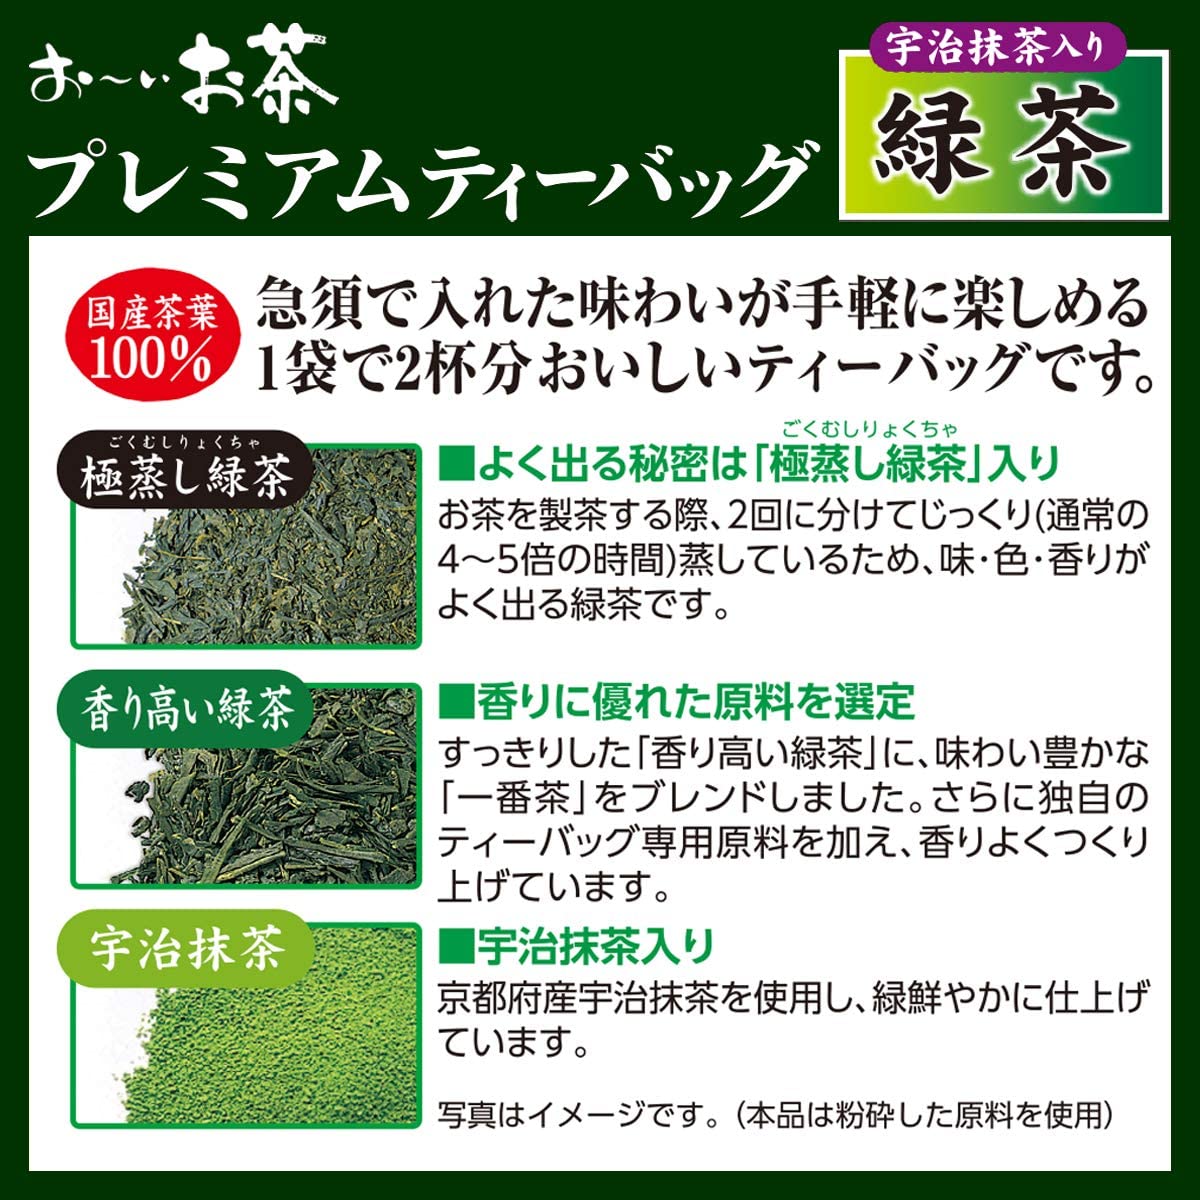 Itoen Oi Ocha Premium Tea Bag Green Tea with Uji Matcha 1.8g x 20 Bags